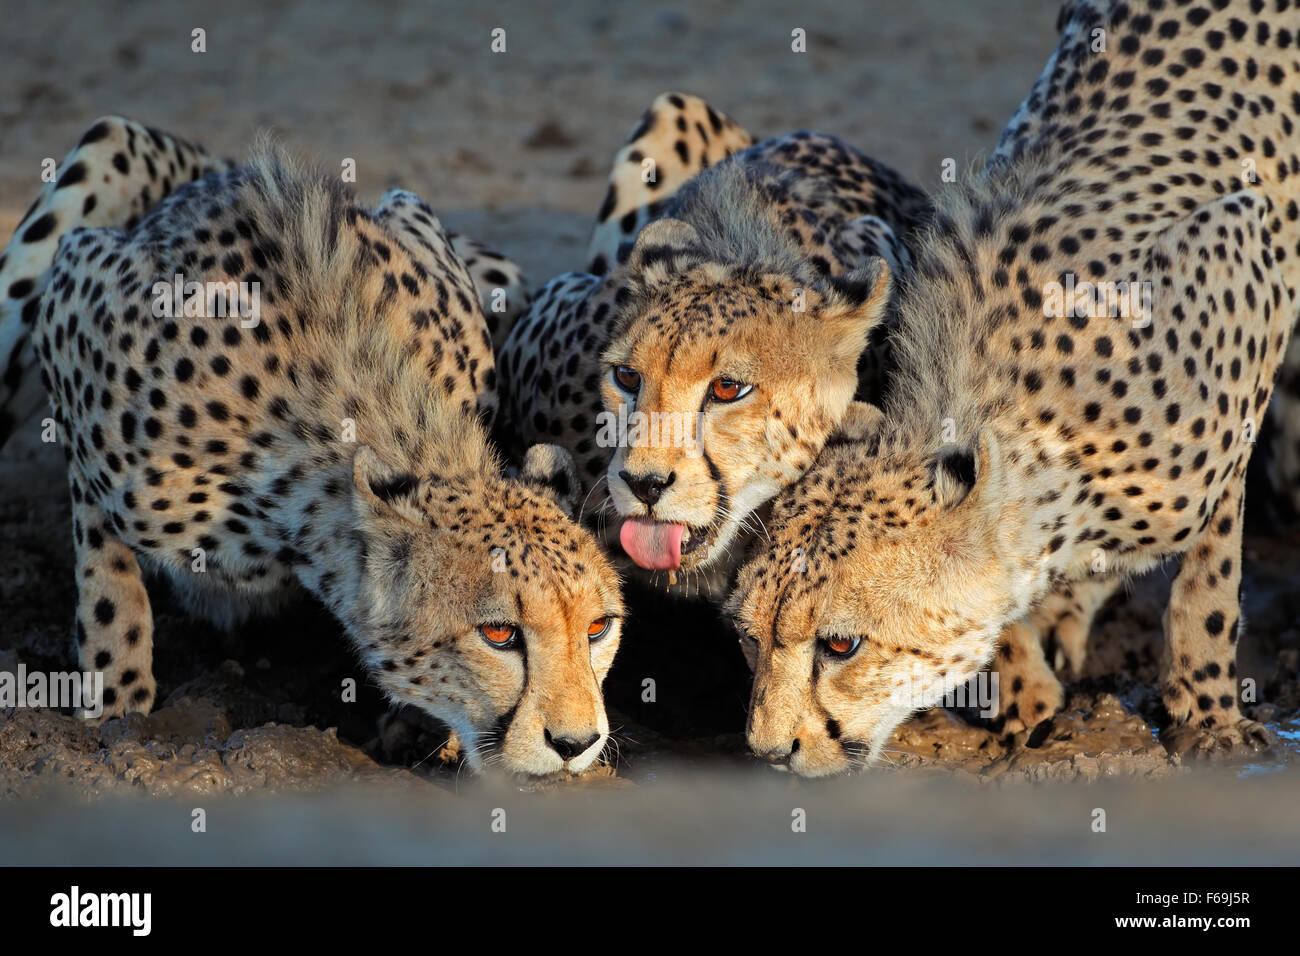 Alert cheetahs (Acinonyx jubatus) drinking water, Kalahari desert, South Africa Stock Photo